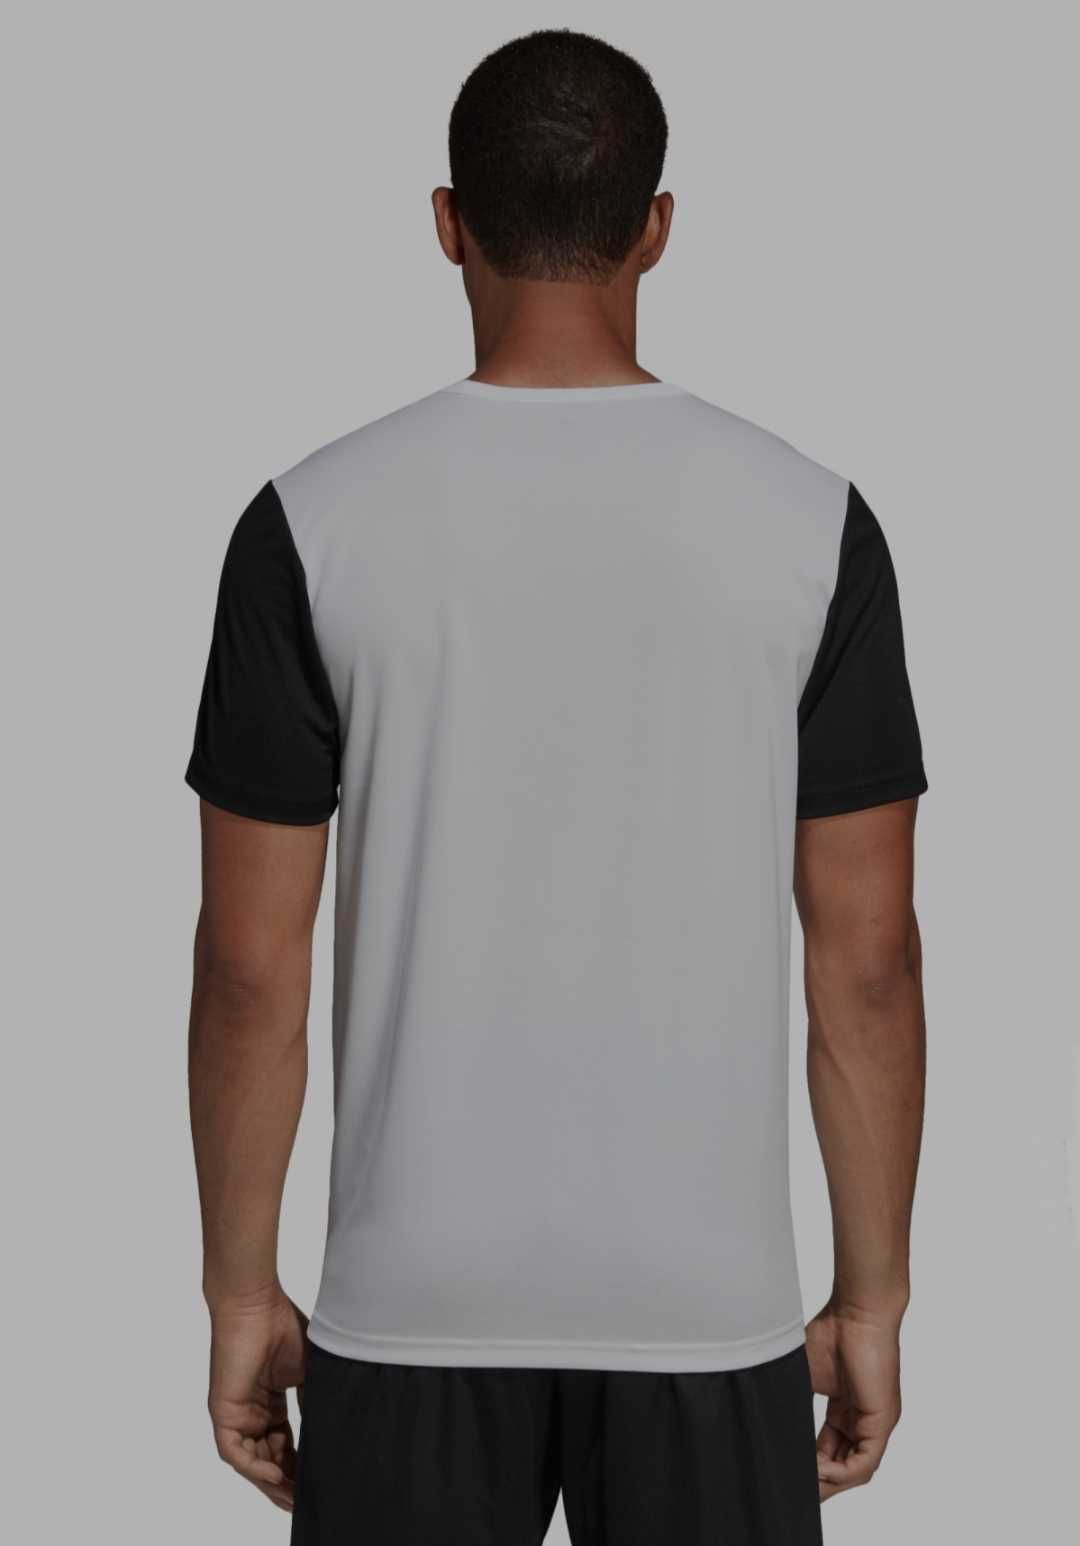 Koszulka sportowa Adidas Estro Climalite L/XL Nowa